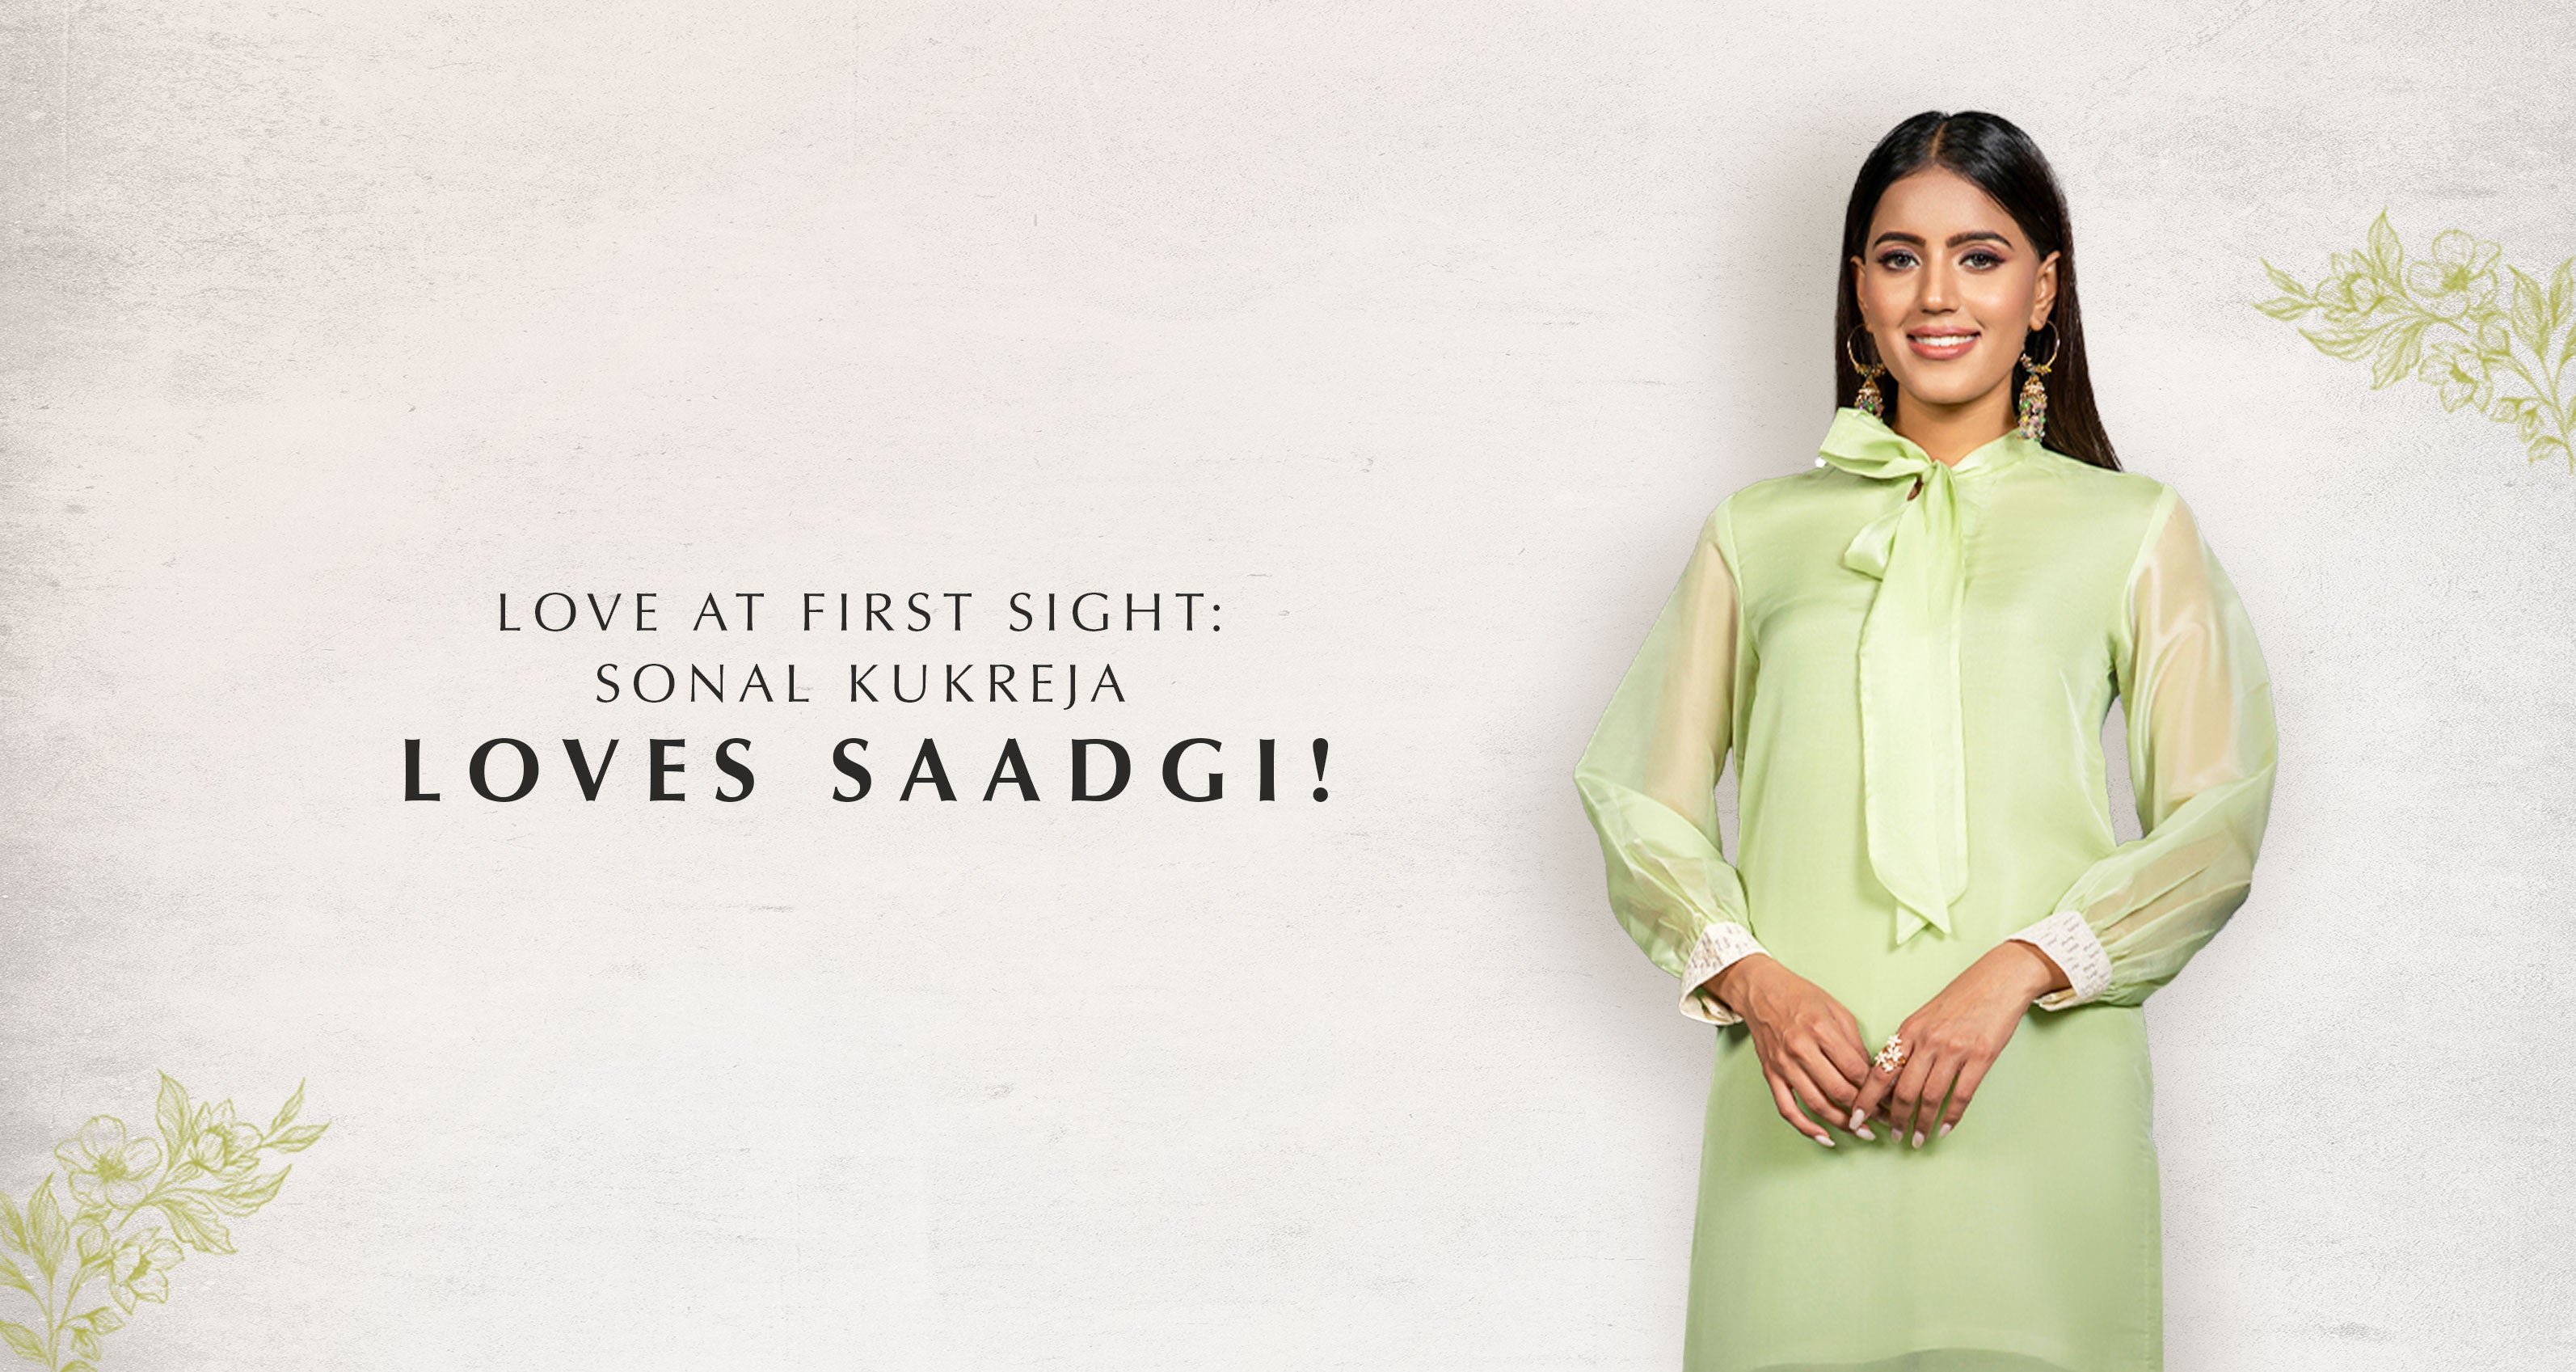 Love at First Sight: Sonal Kukereja loves Saadgi!